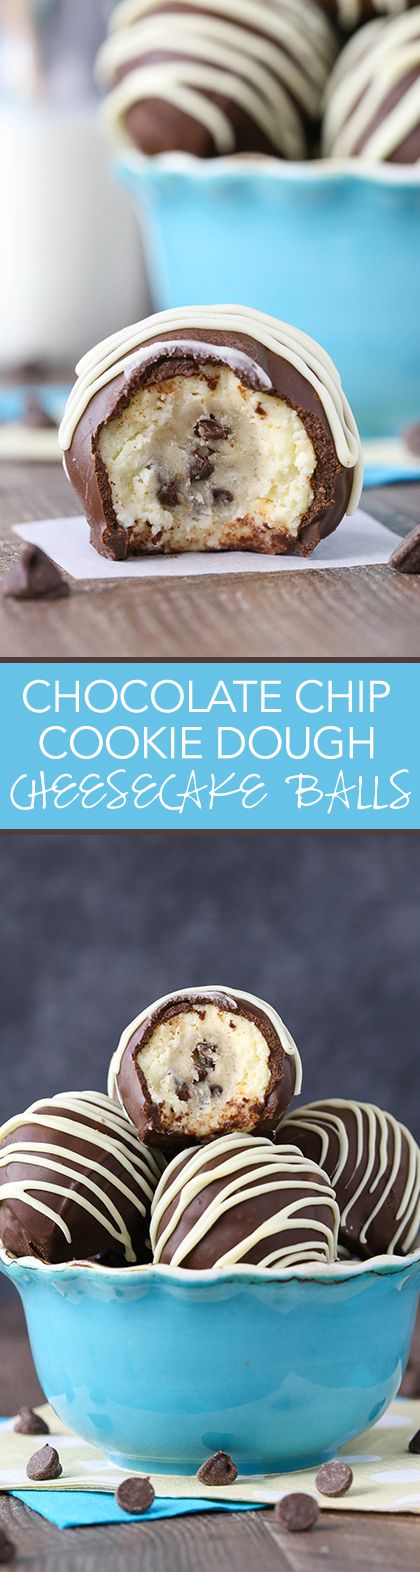 Chocolate Chip Cookie Dough Cheesecake Balls